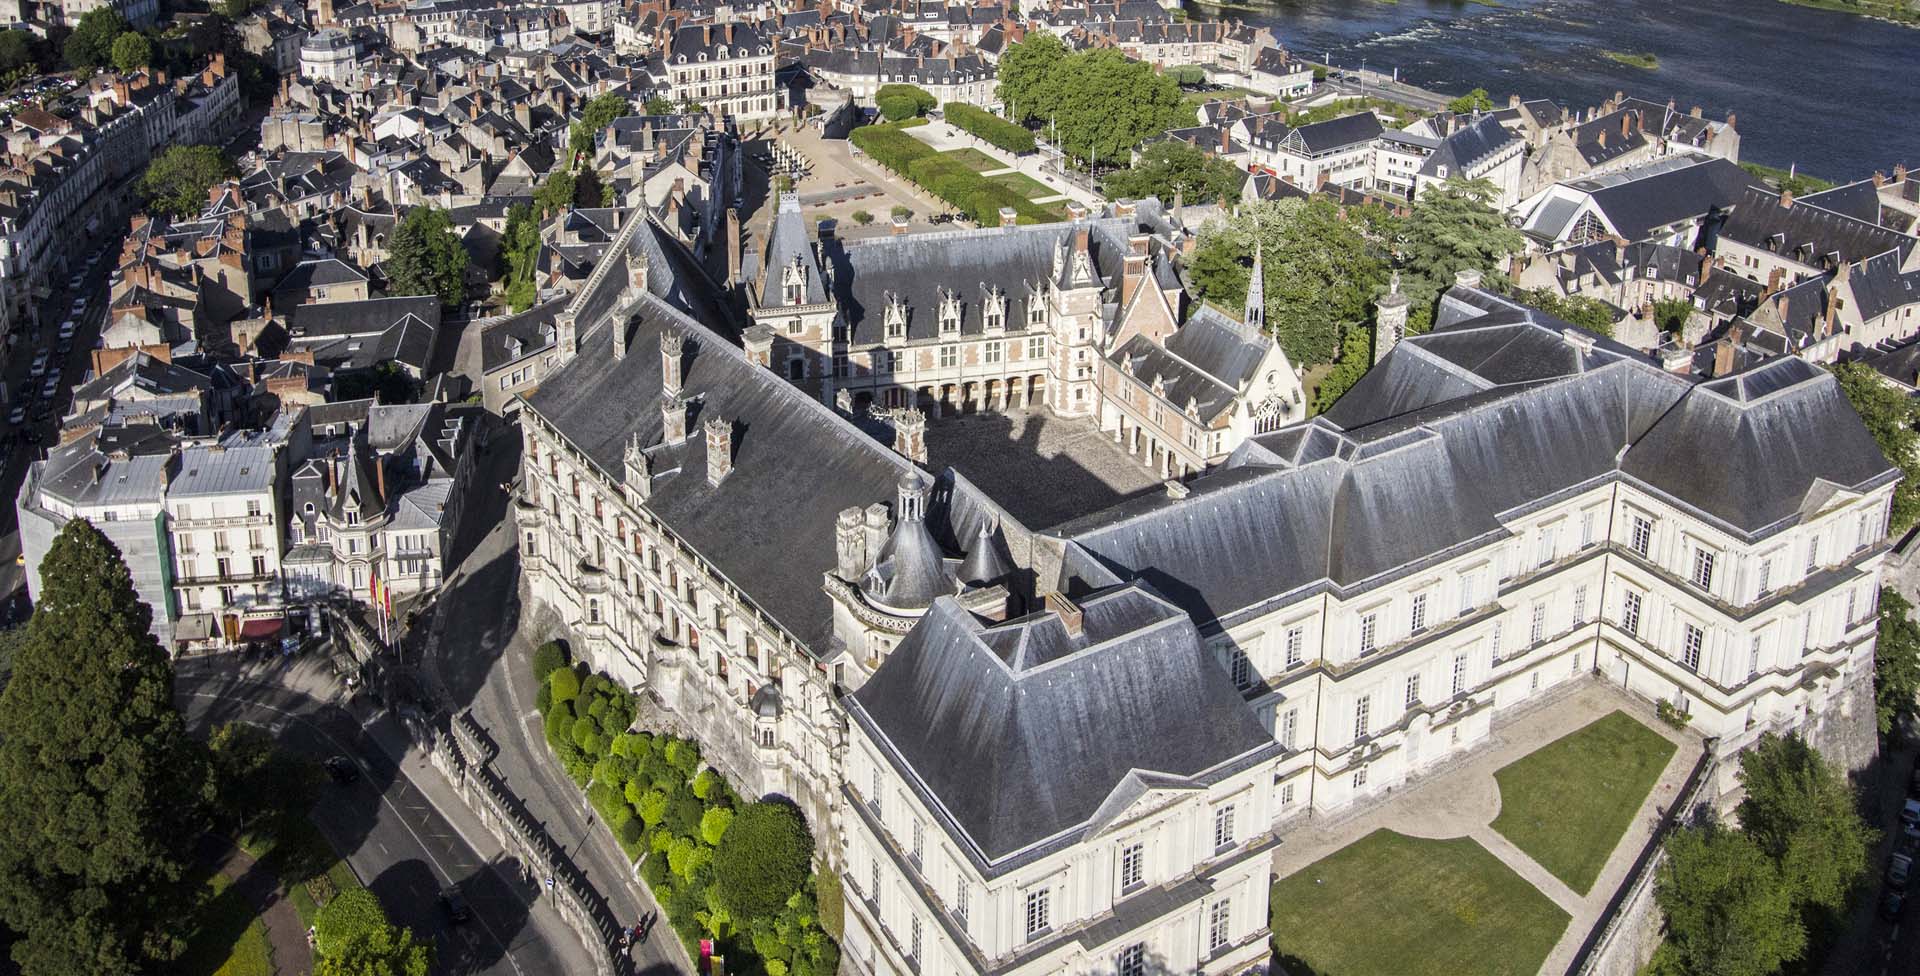 Travel to France - Blois Castle